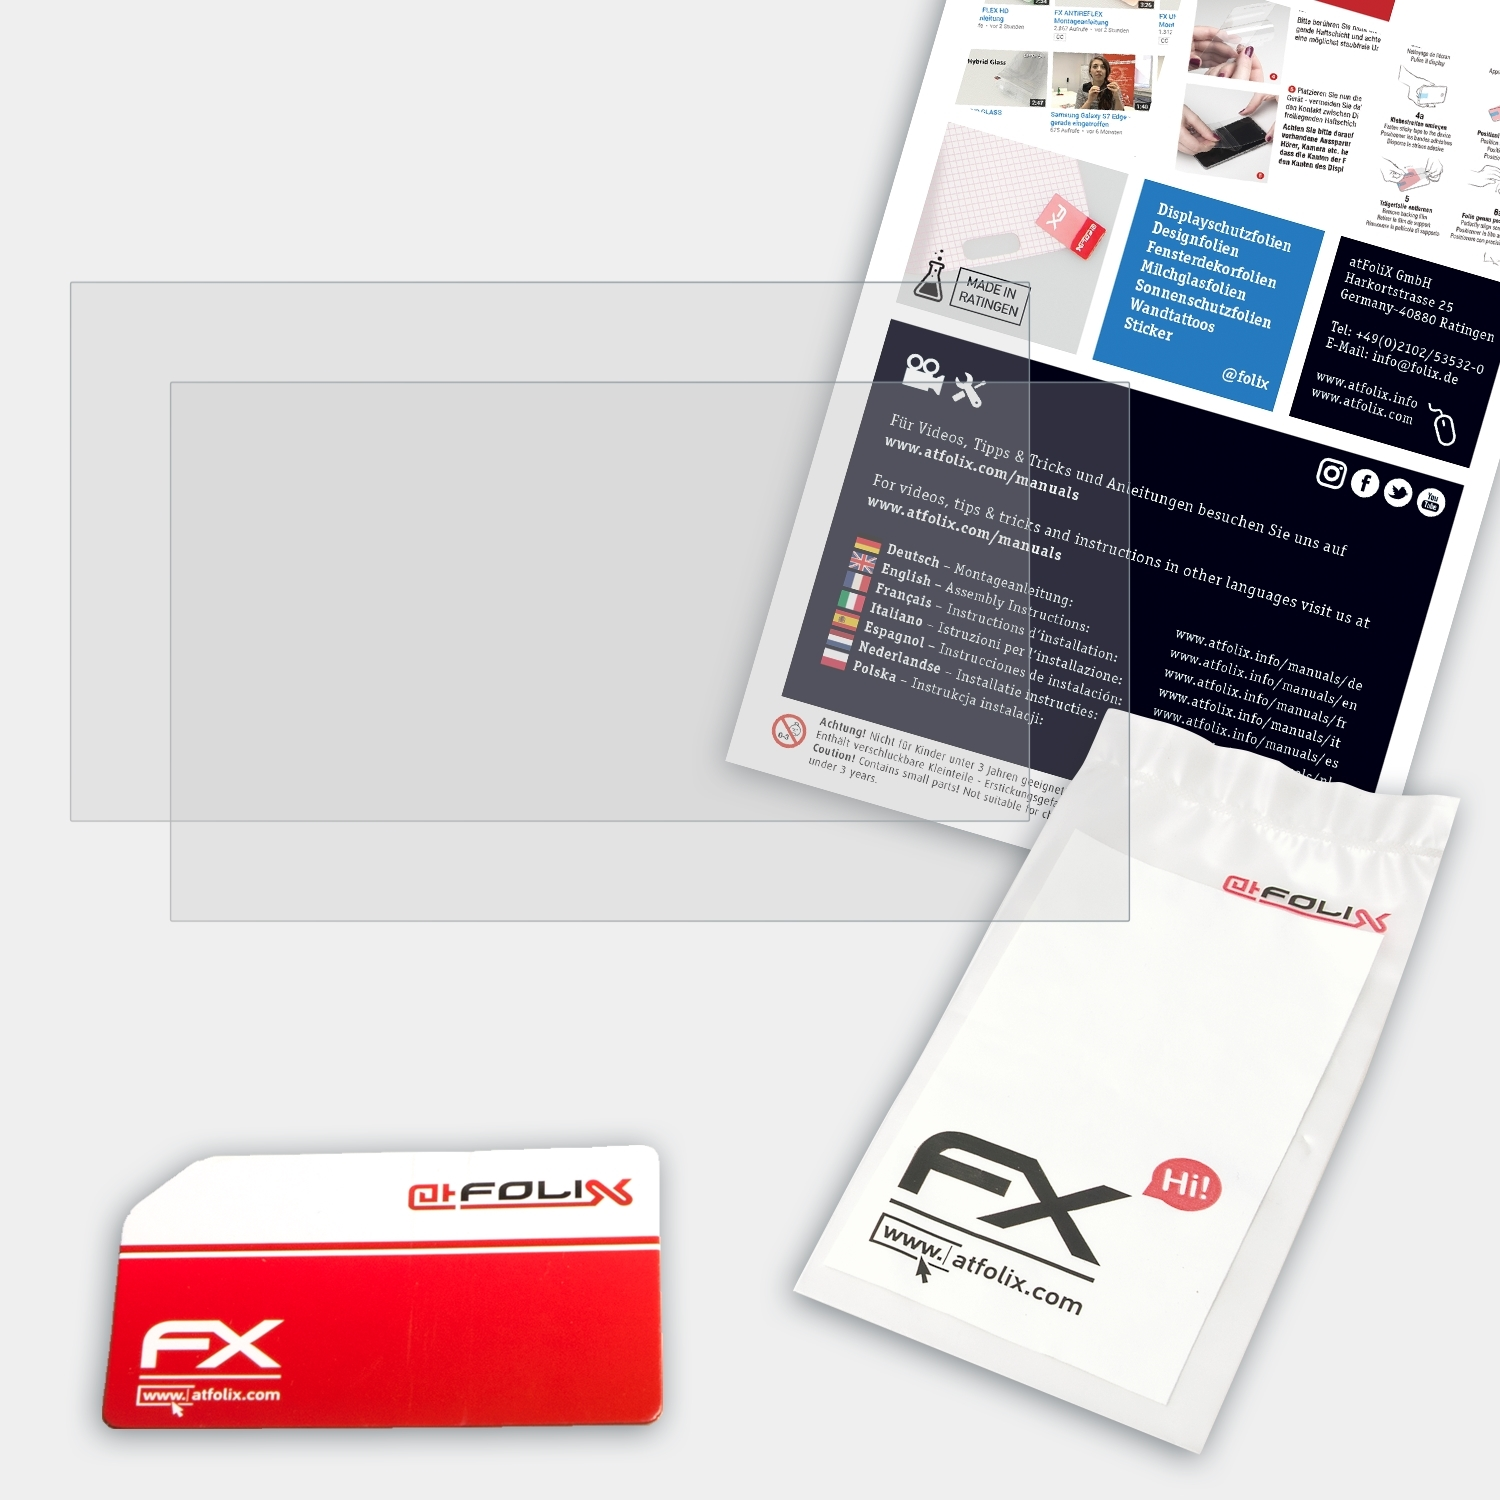 2x FX-Antireflex Displayschutz(für Pavilion ATFOLIX HP 15-cs0301ng)